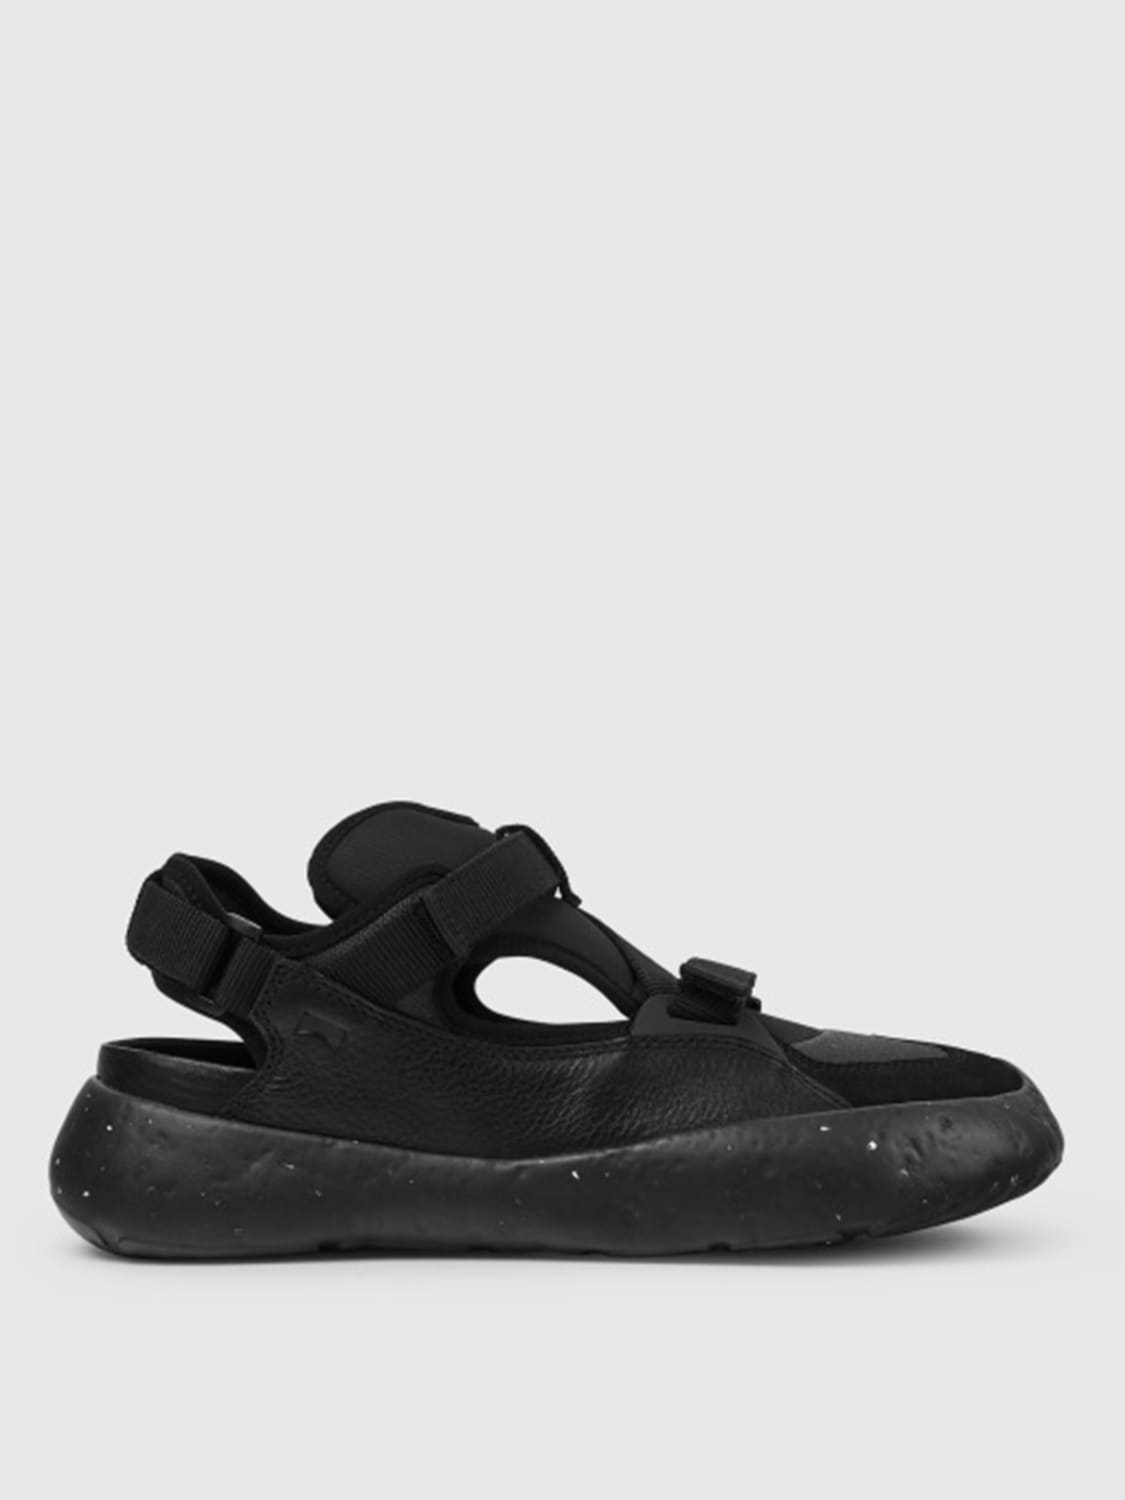 Camper Outlet: Peu Stadium shoes in calfskin and PET - Black | Camper sneakers K100801-001 PEU STADIUM online on GIGLIO.COM